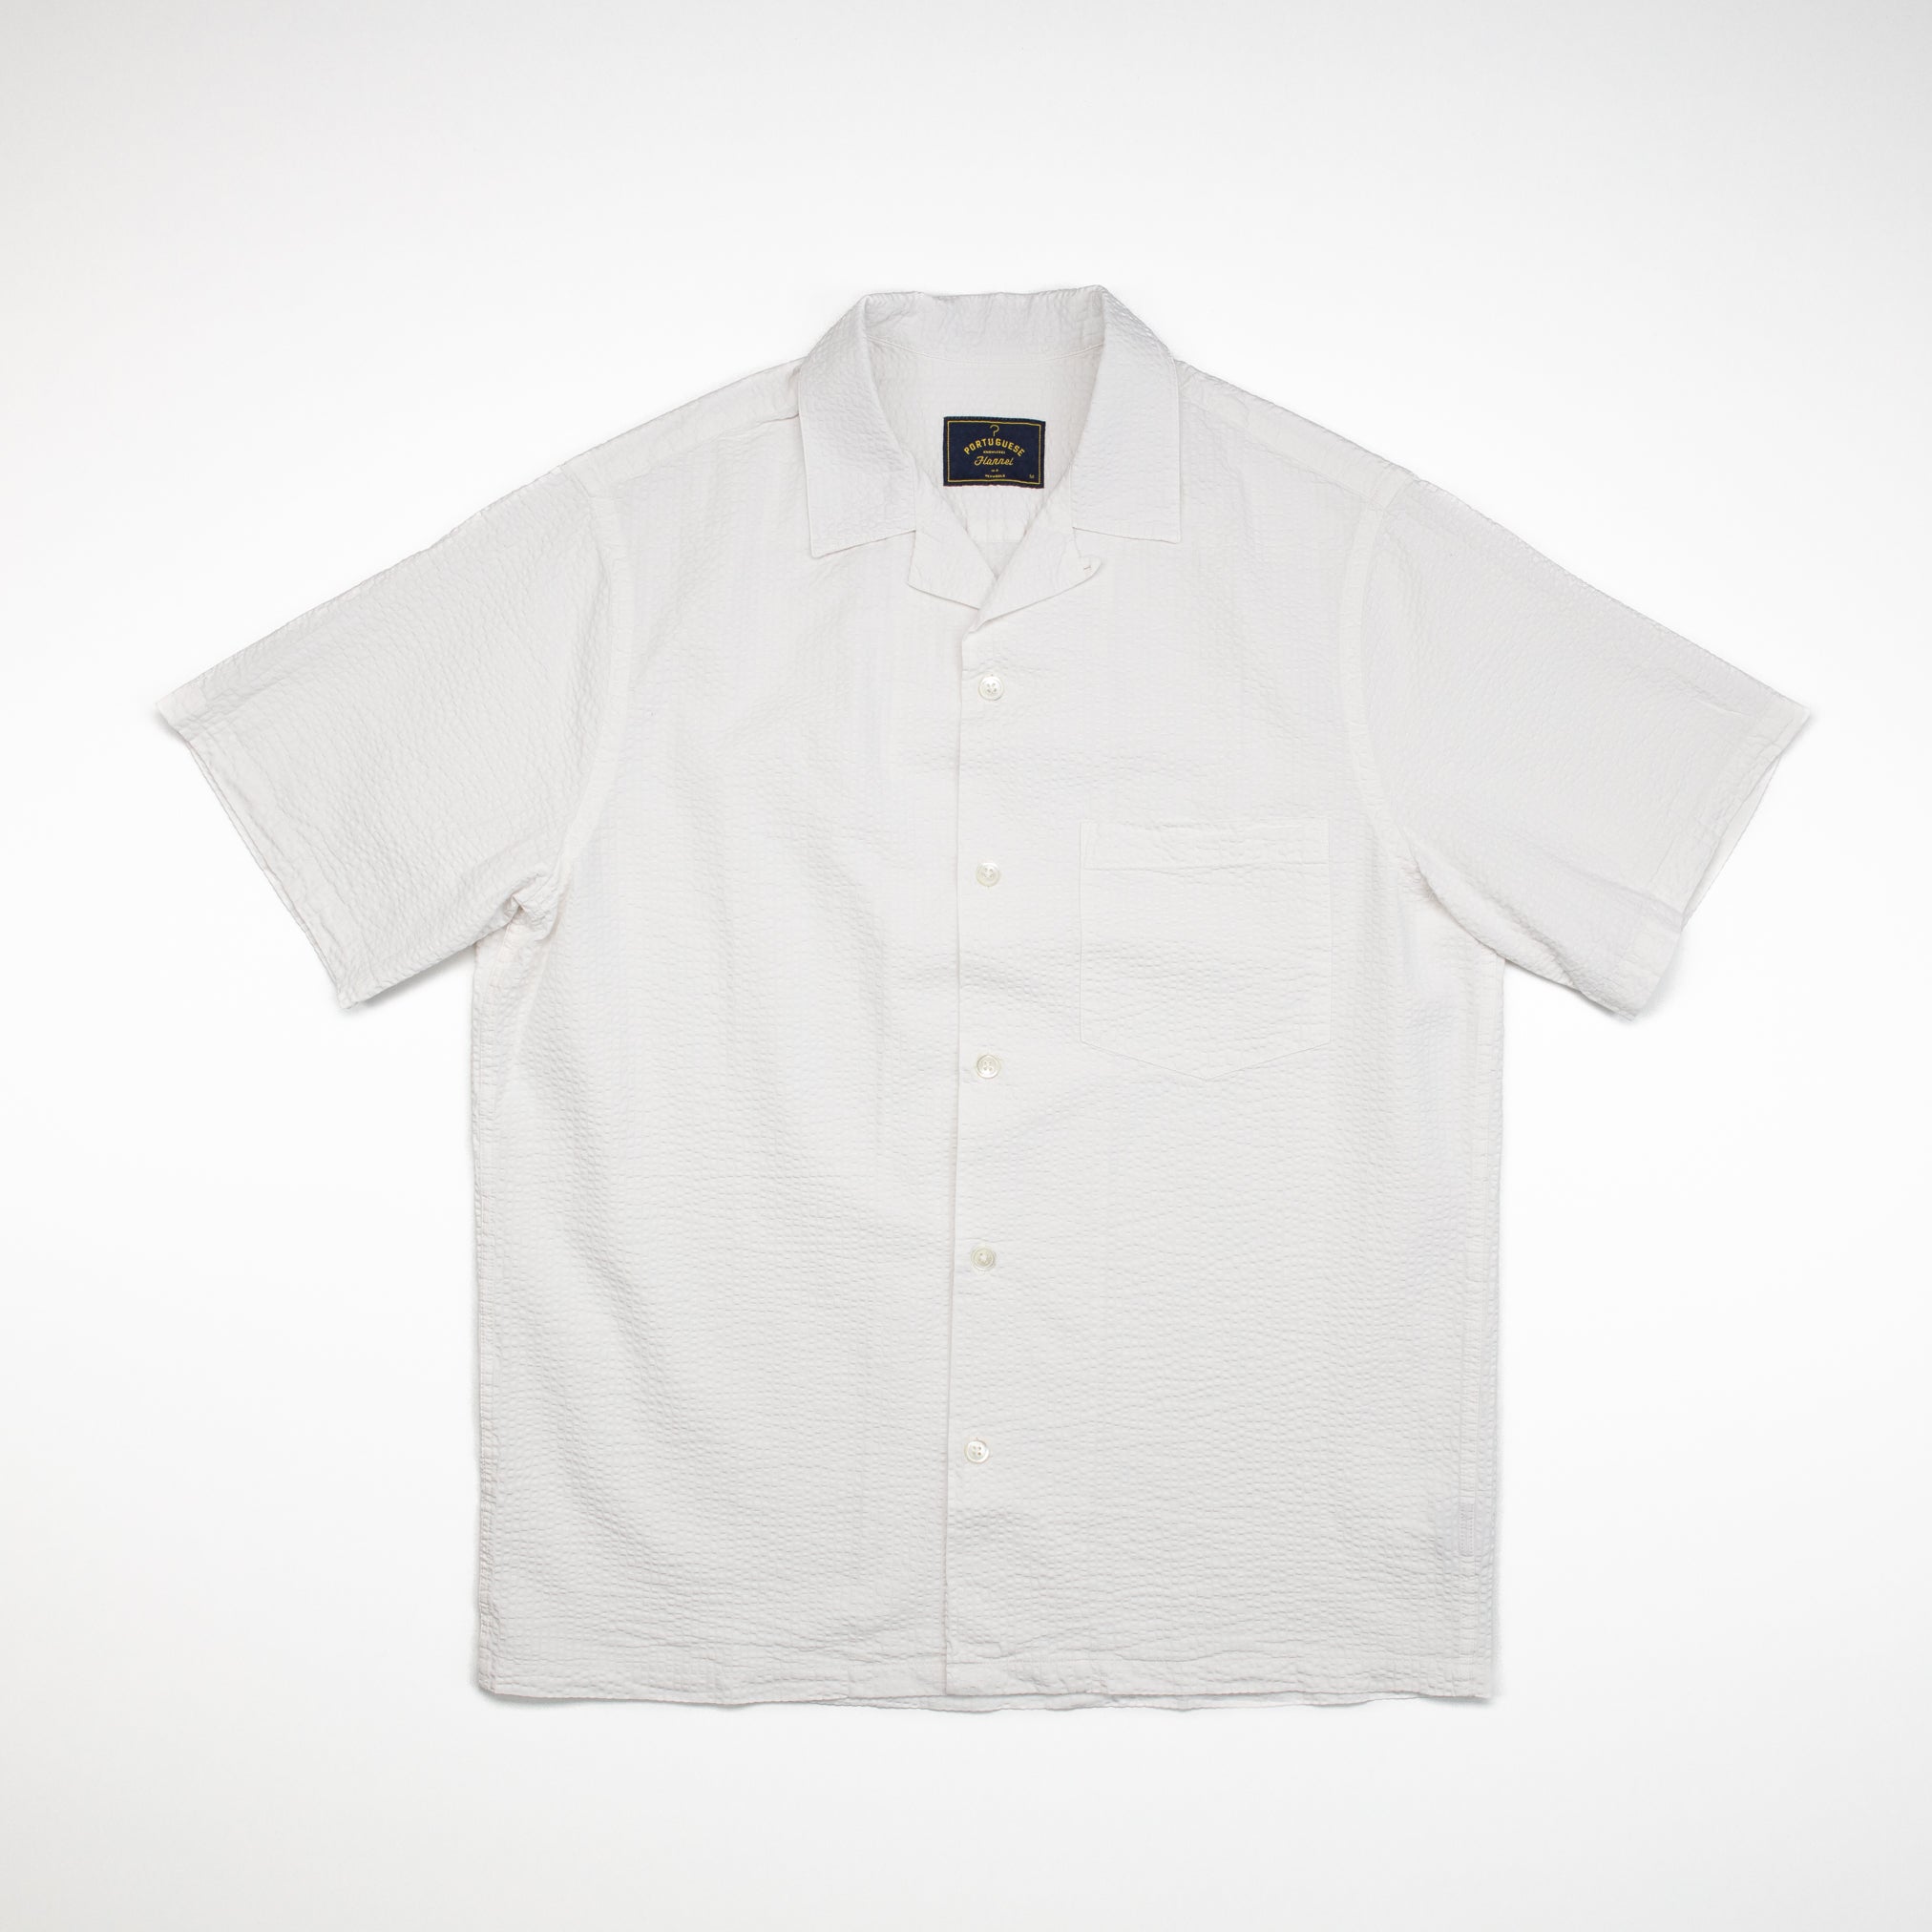 Atlantico Shirt in White Seersucker